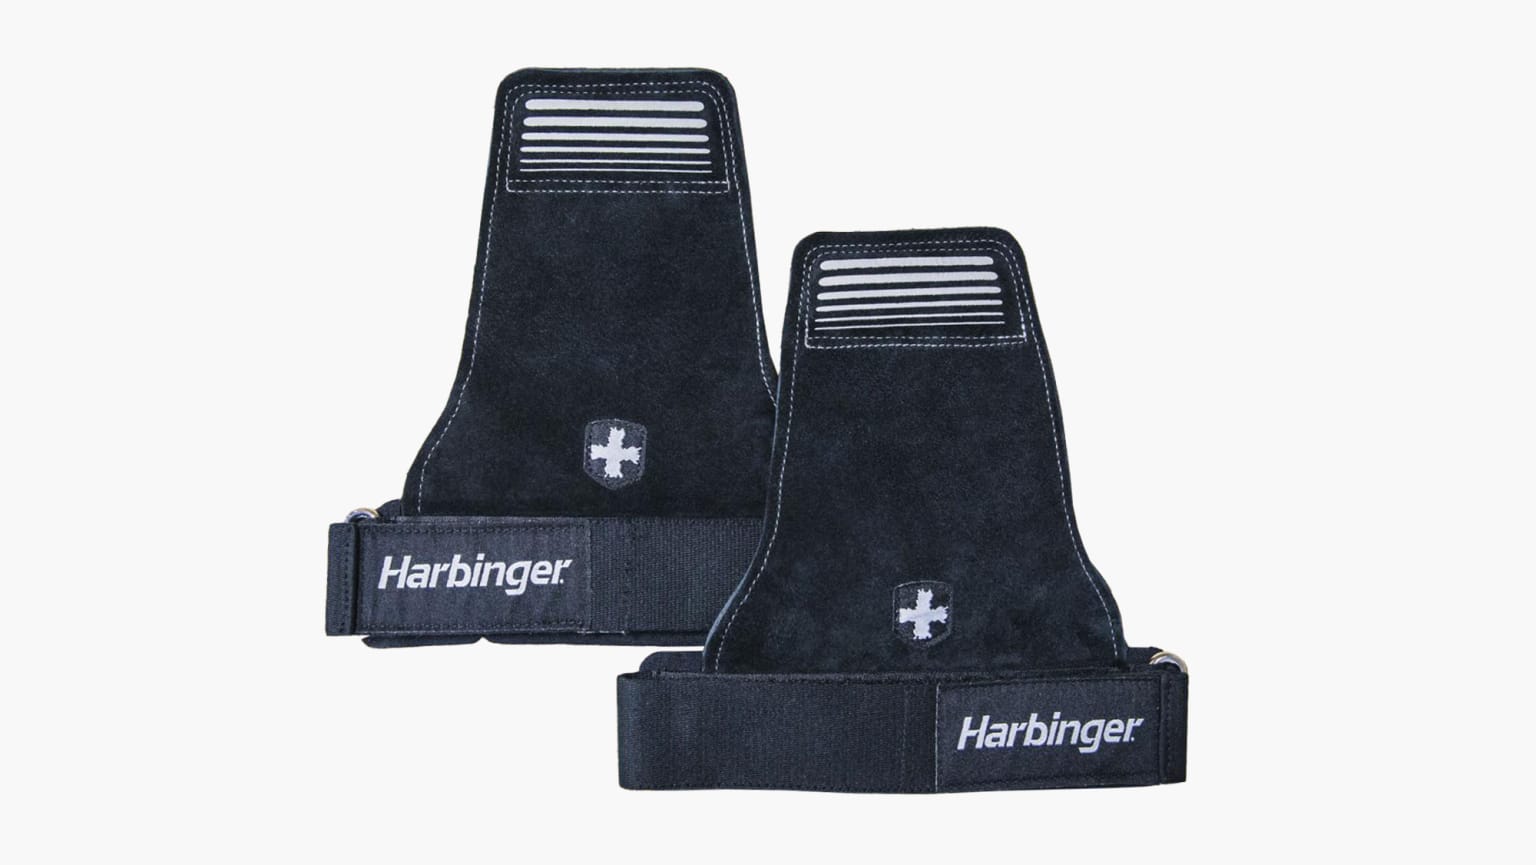 New Harbinger LEATHER LIFTING STRAPS Exercise/Fitness / Accessories  Exercise/Fitness / Accessories